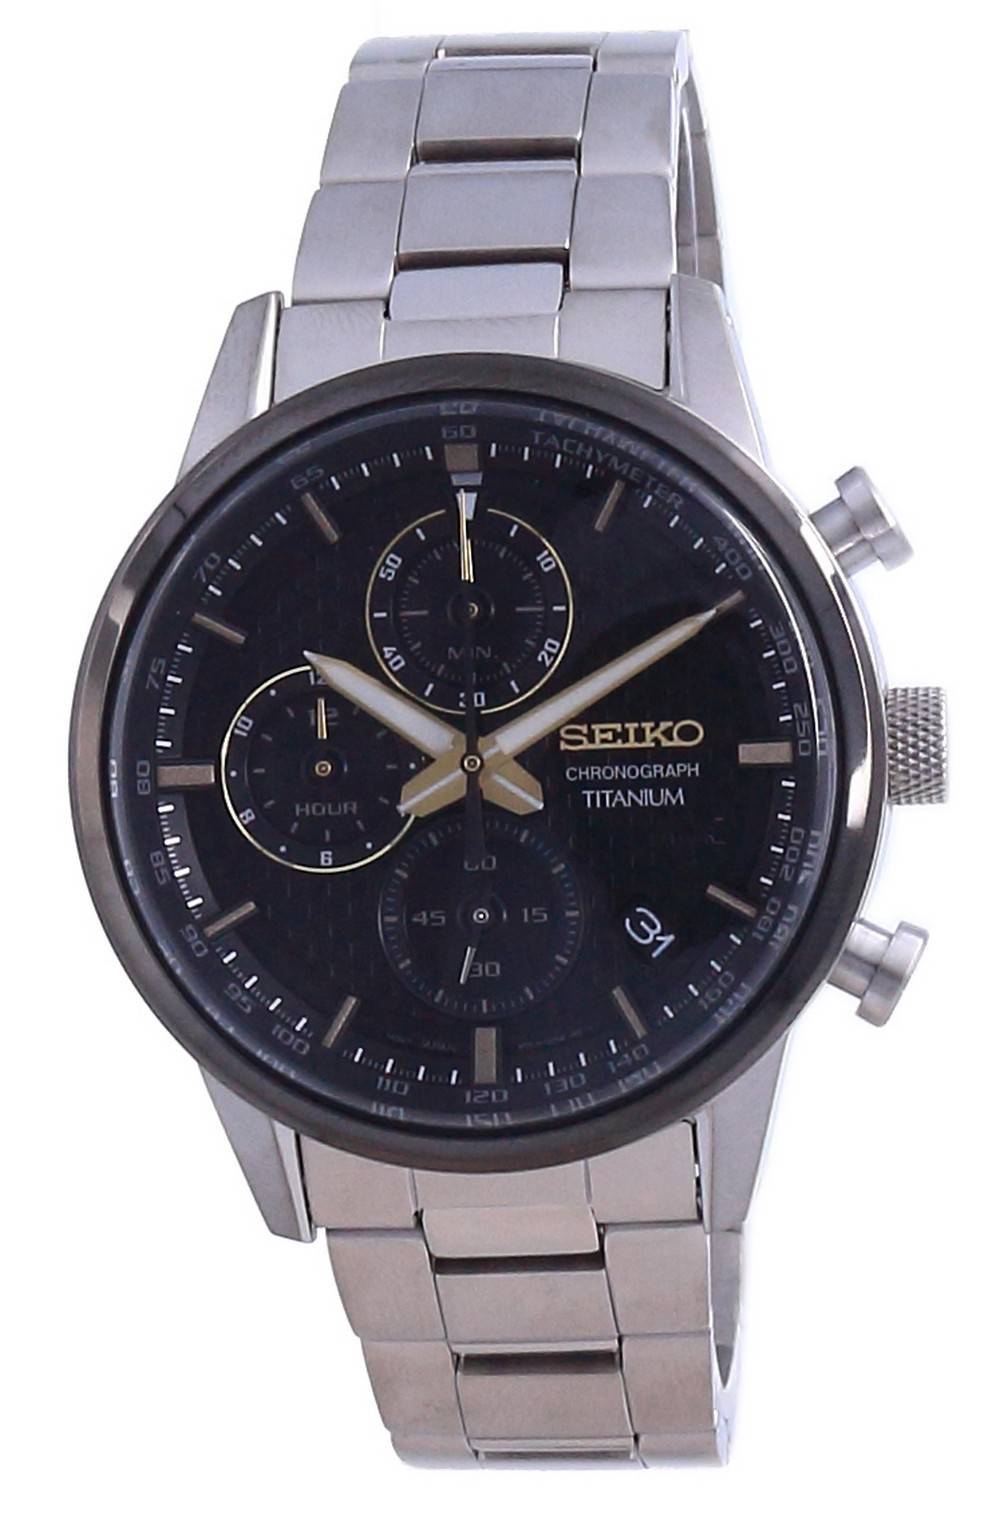 Seiko Titanium Watches - Titanium Chronograph, Kinetic Watch, Alarm,  Sapphire Crystal Watches